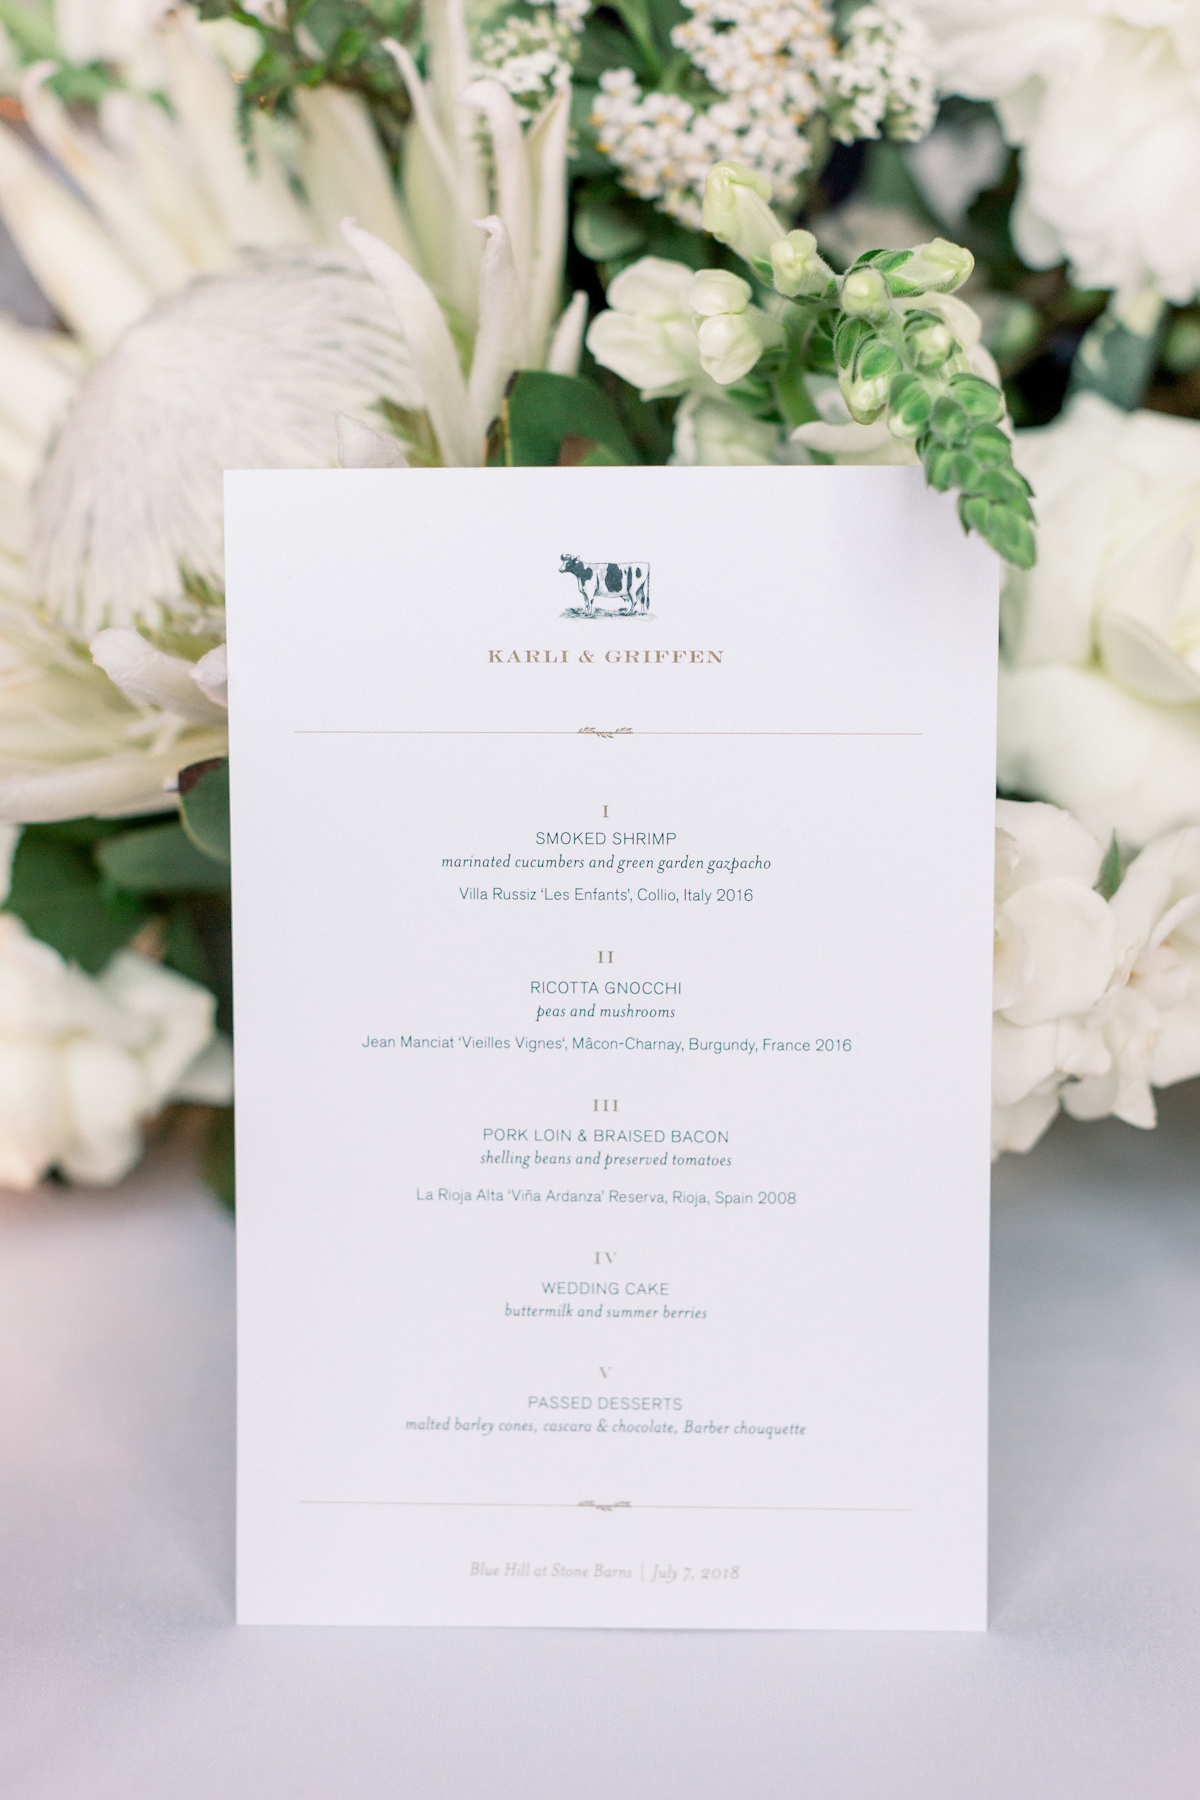 Blue Hill at Stone Barns wedding menu with cow motif